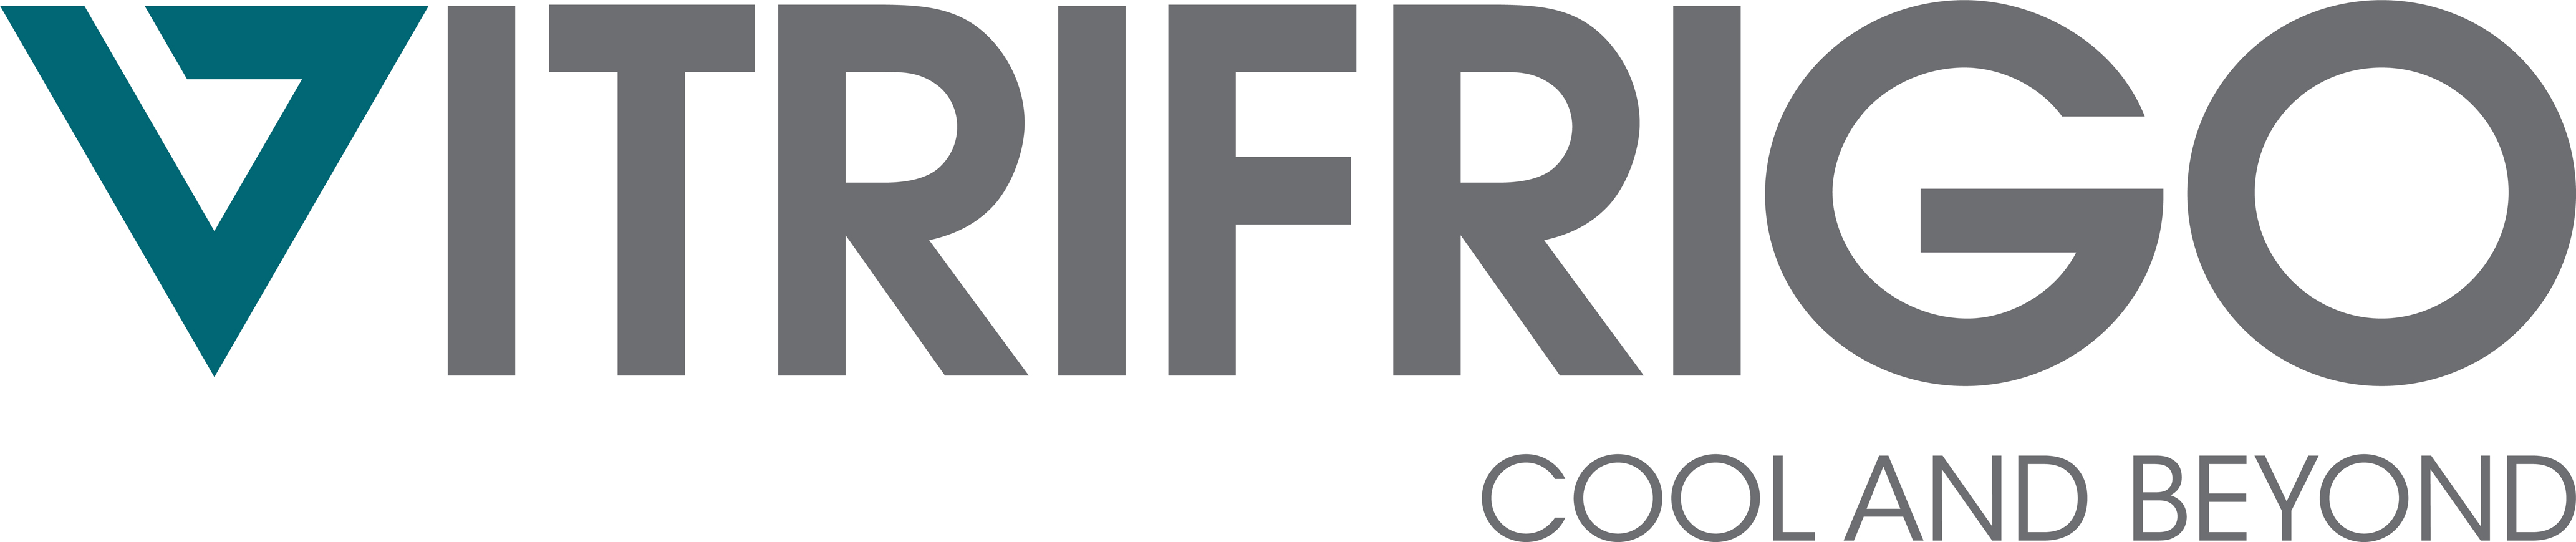 NEW-Vf-logo